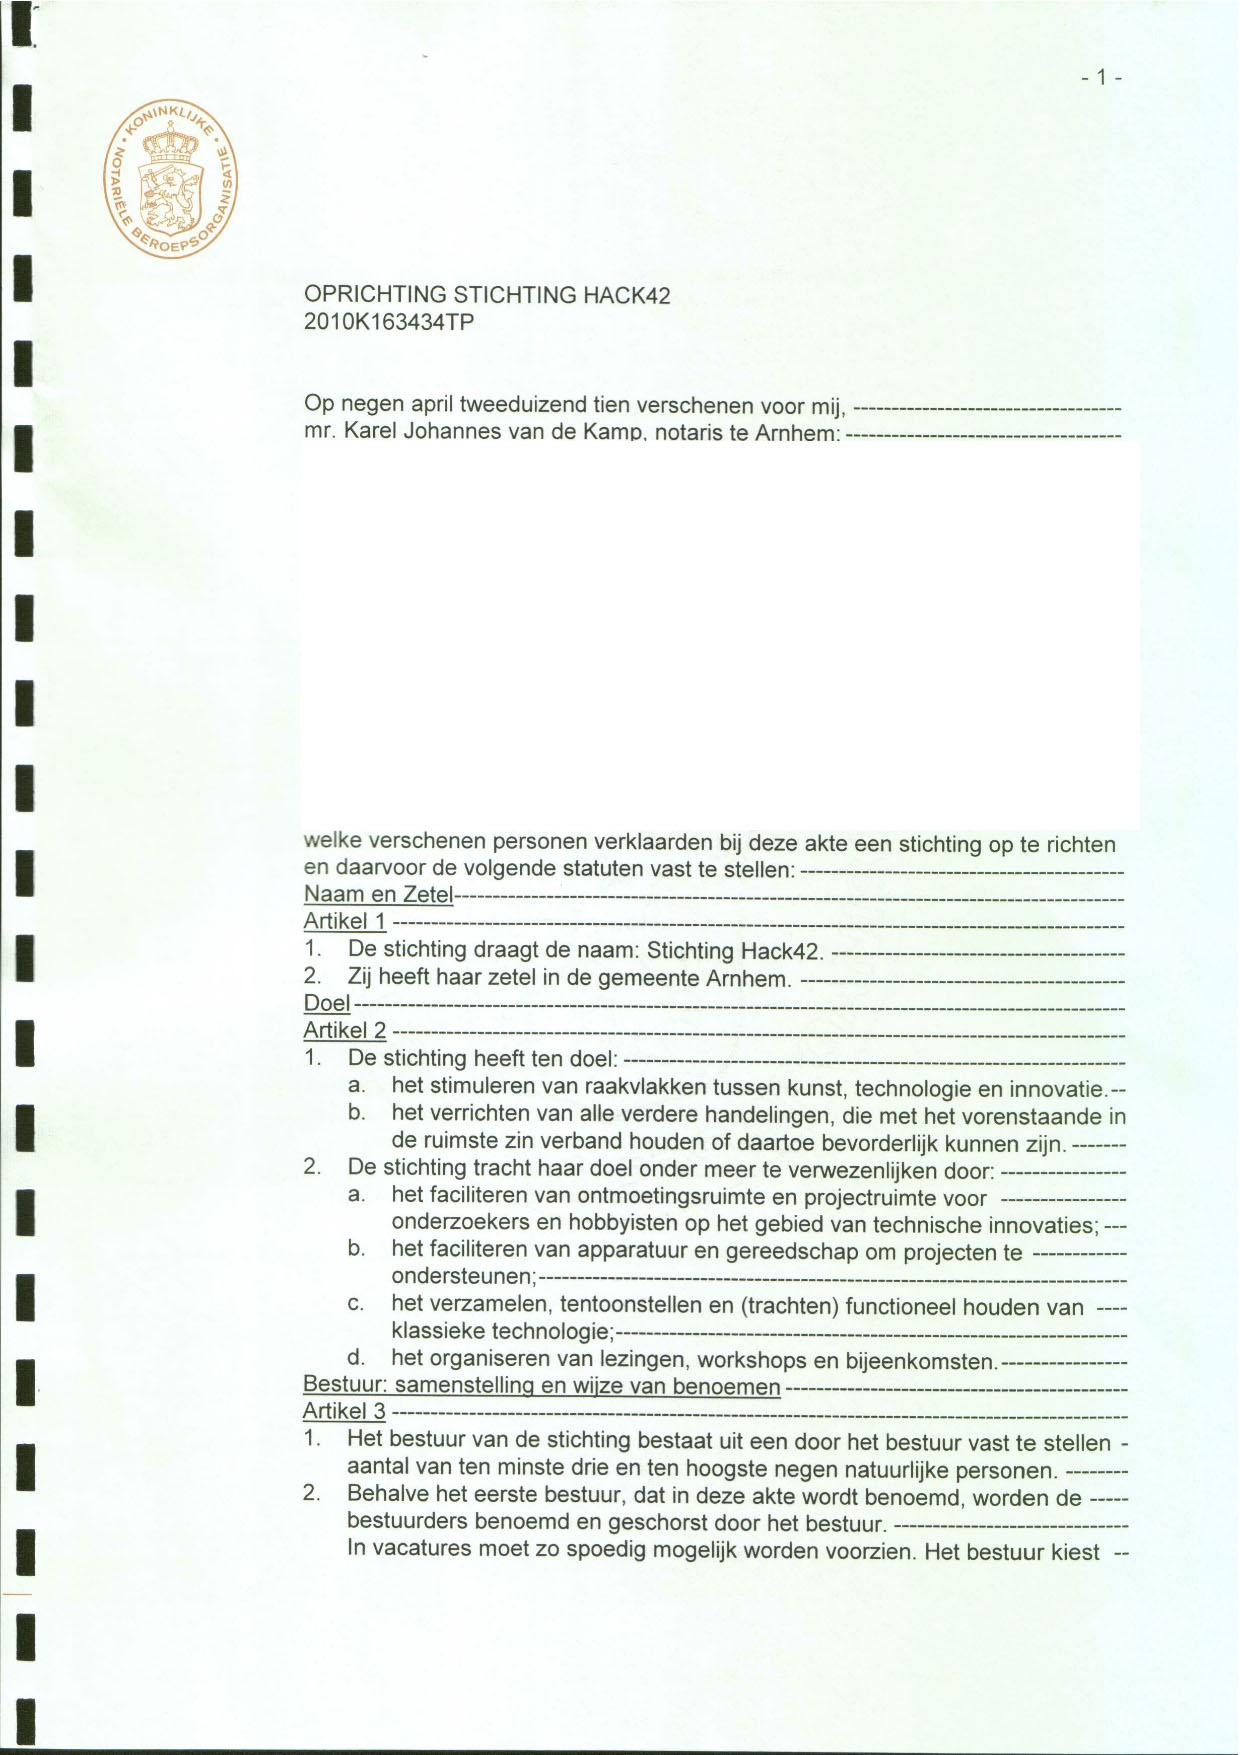 Statuten 15 apr 2010 pagina 1.jpg